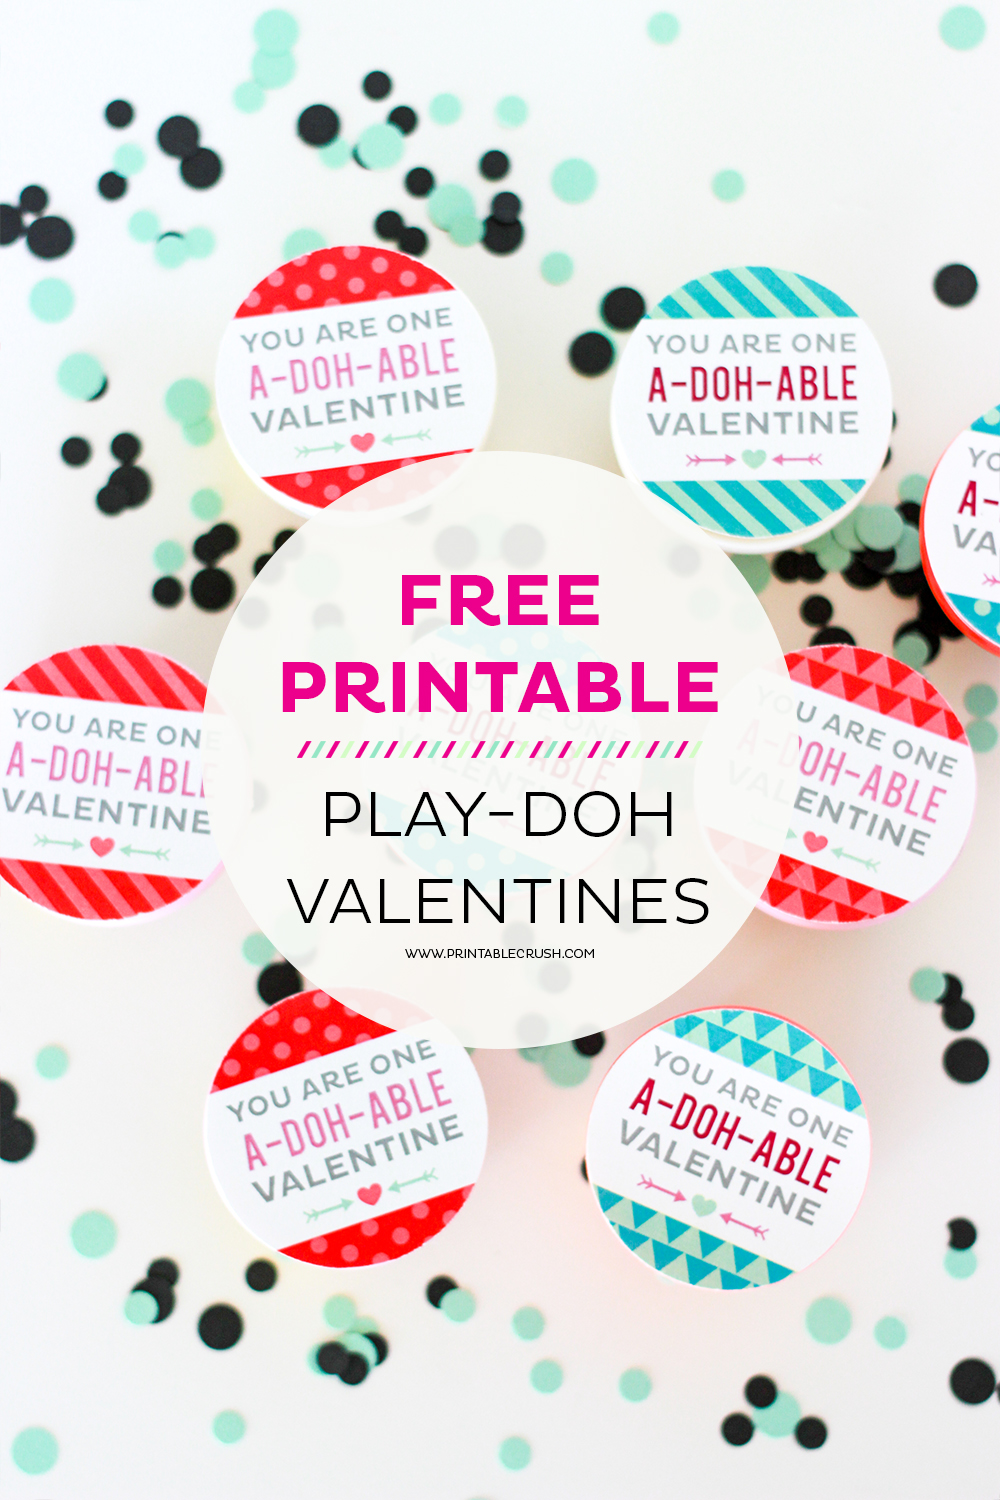 Adorable and FREE Playdoh Valentine Printables Printable Crush